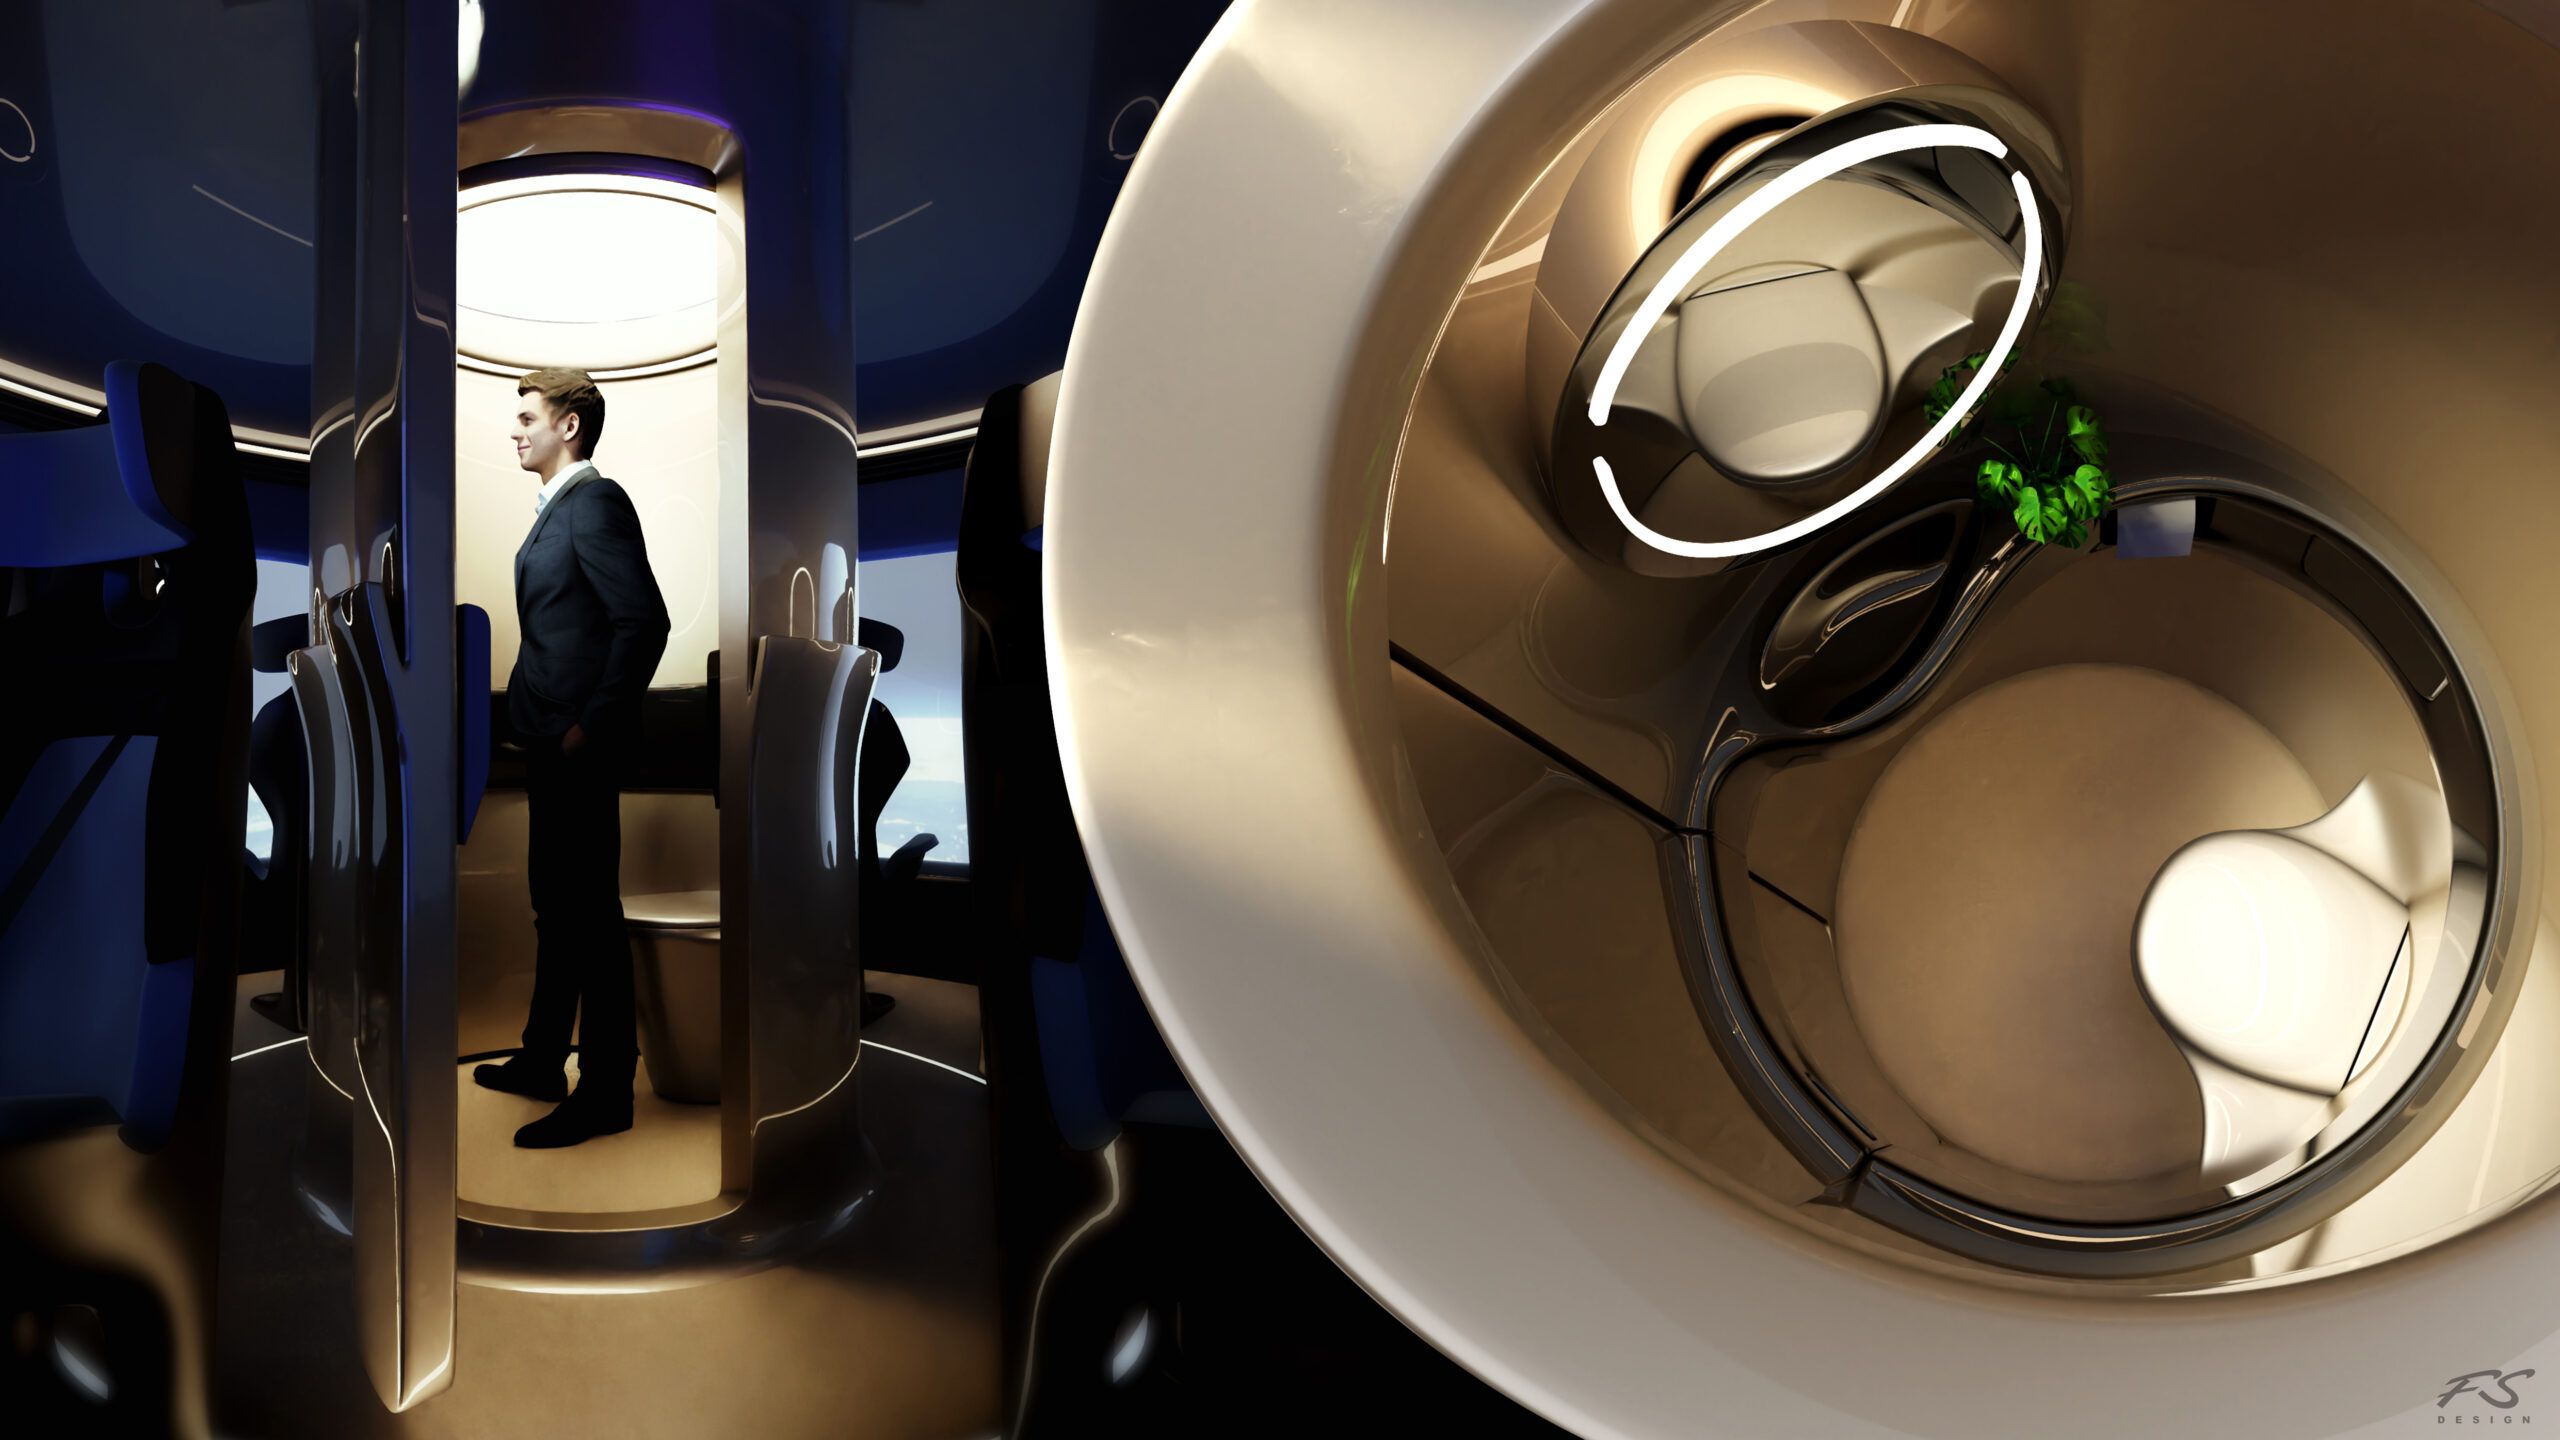 Halo Space to ramp up capsule flight testing program | Aerospace ...